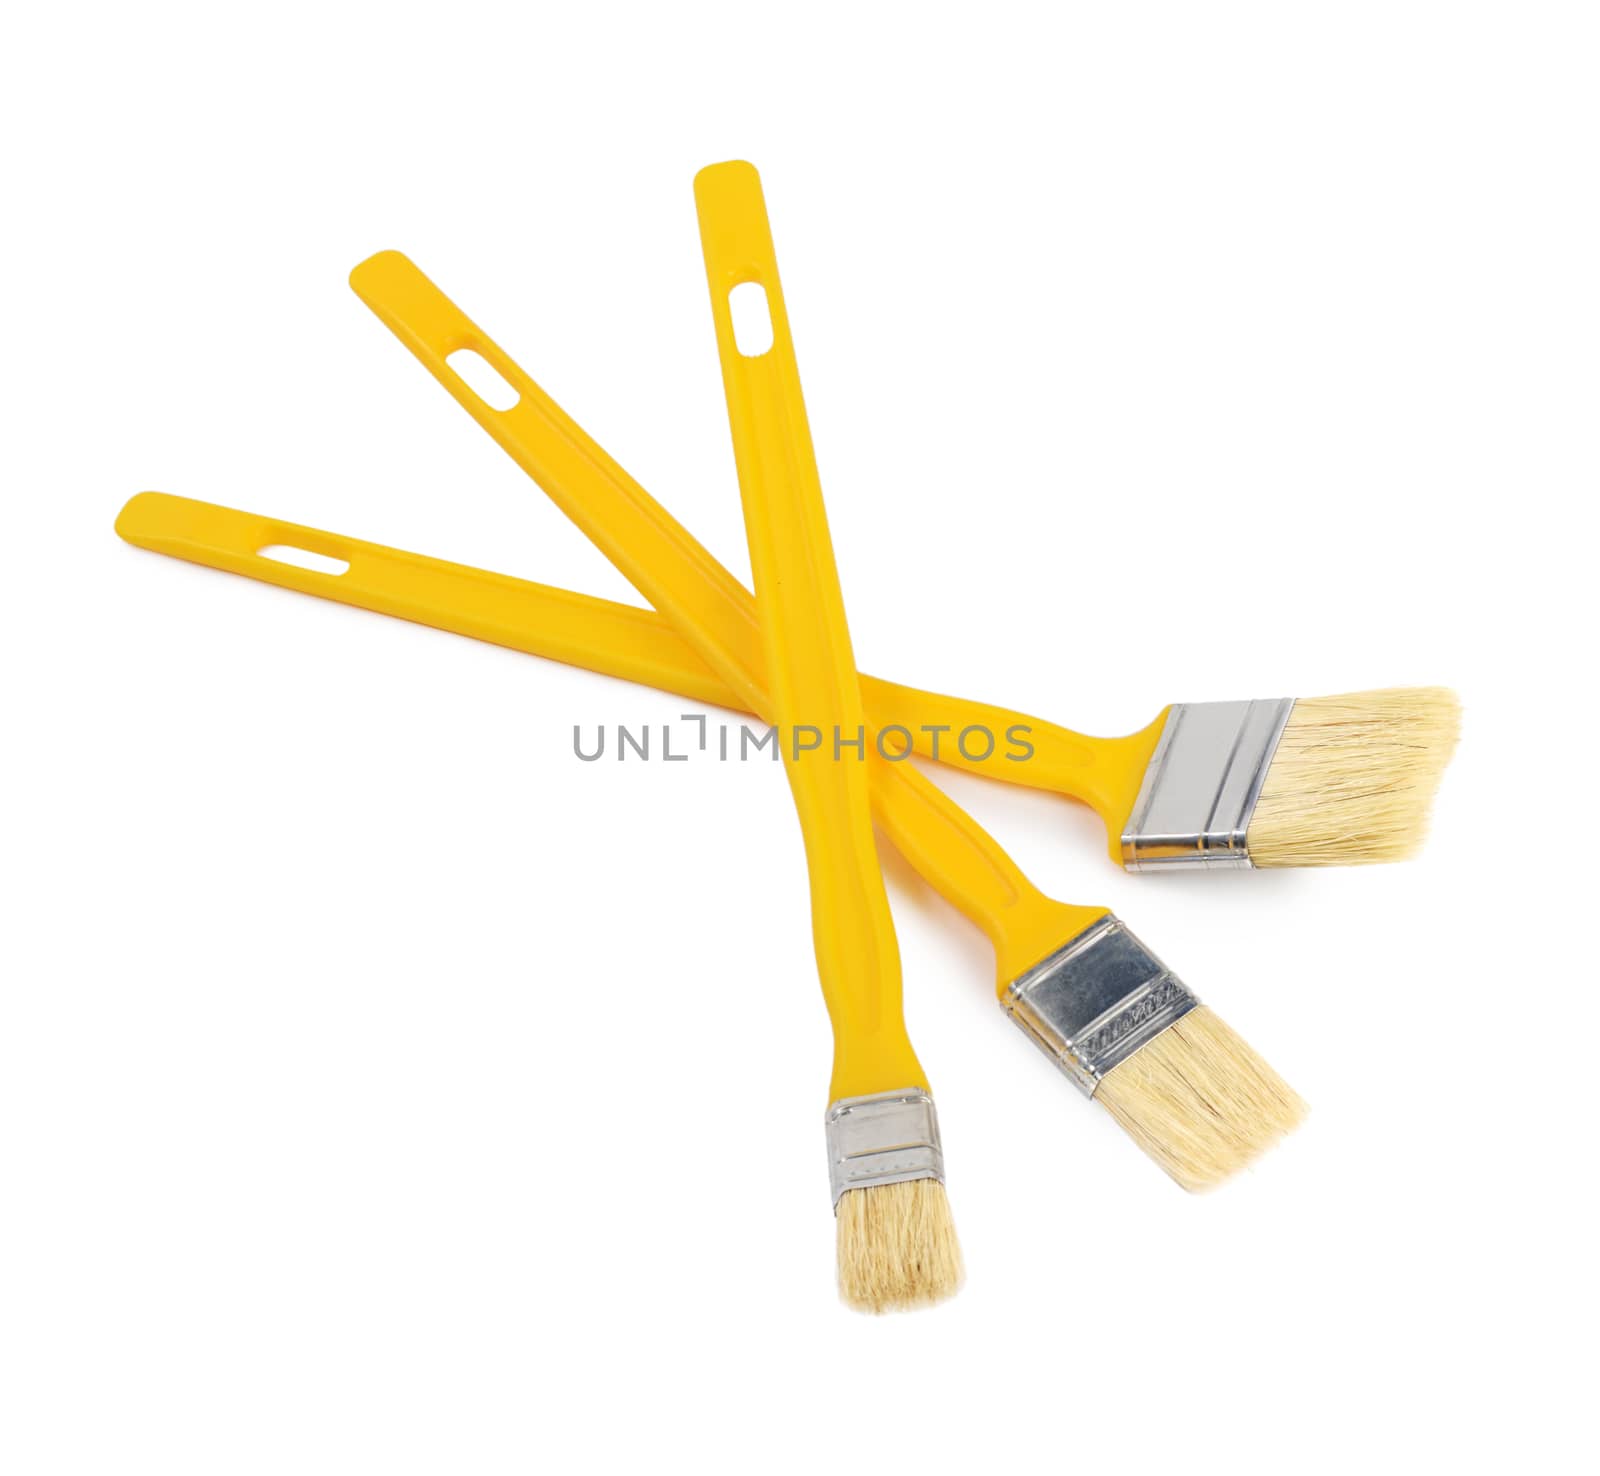 The yellow brush for painting paint by SvetaVo